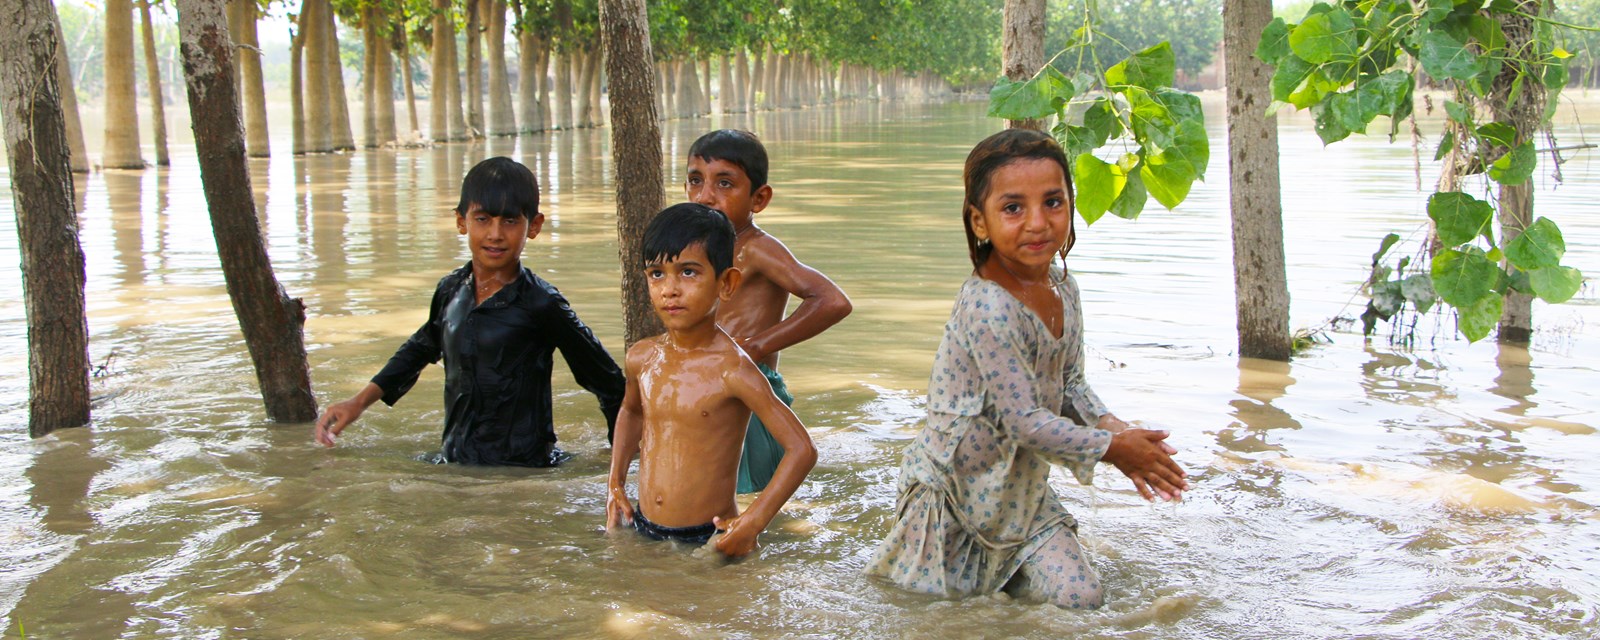 Barn i flomvann i Pakistan. 